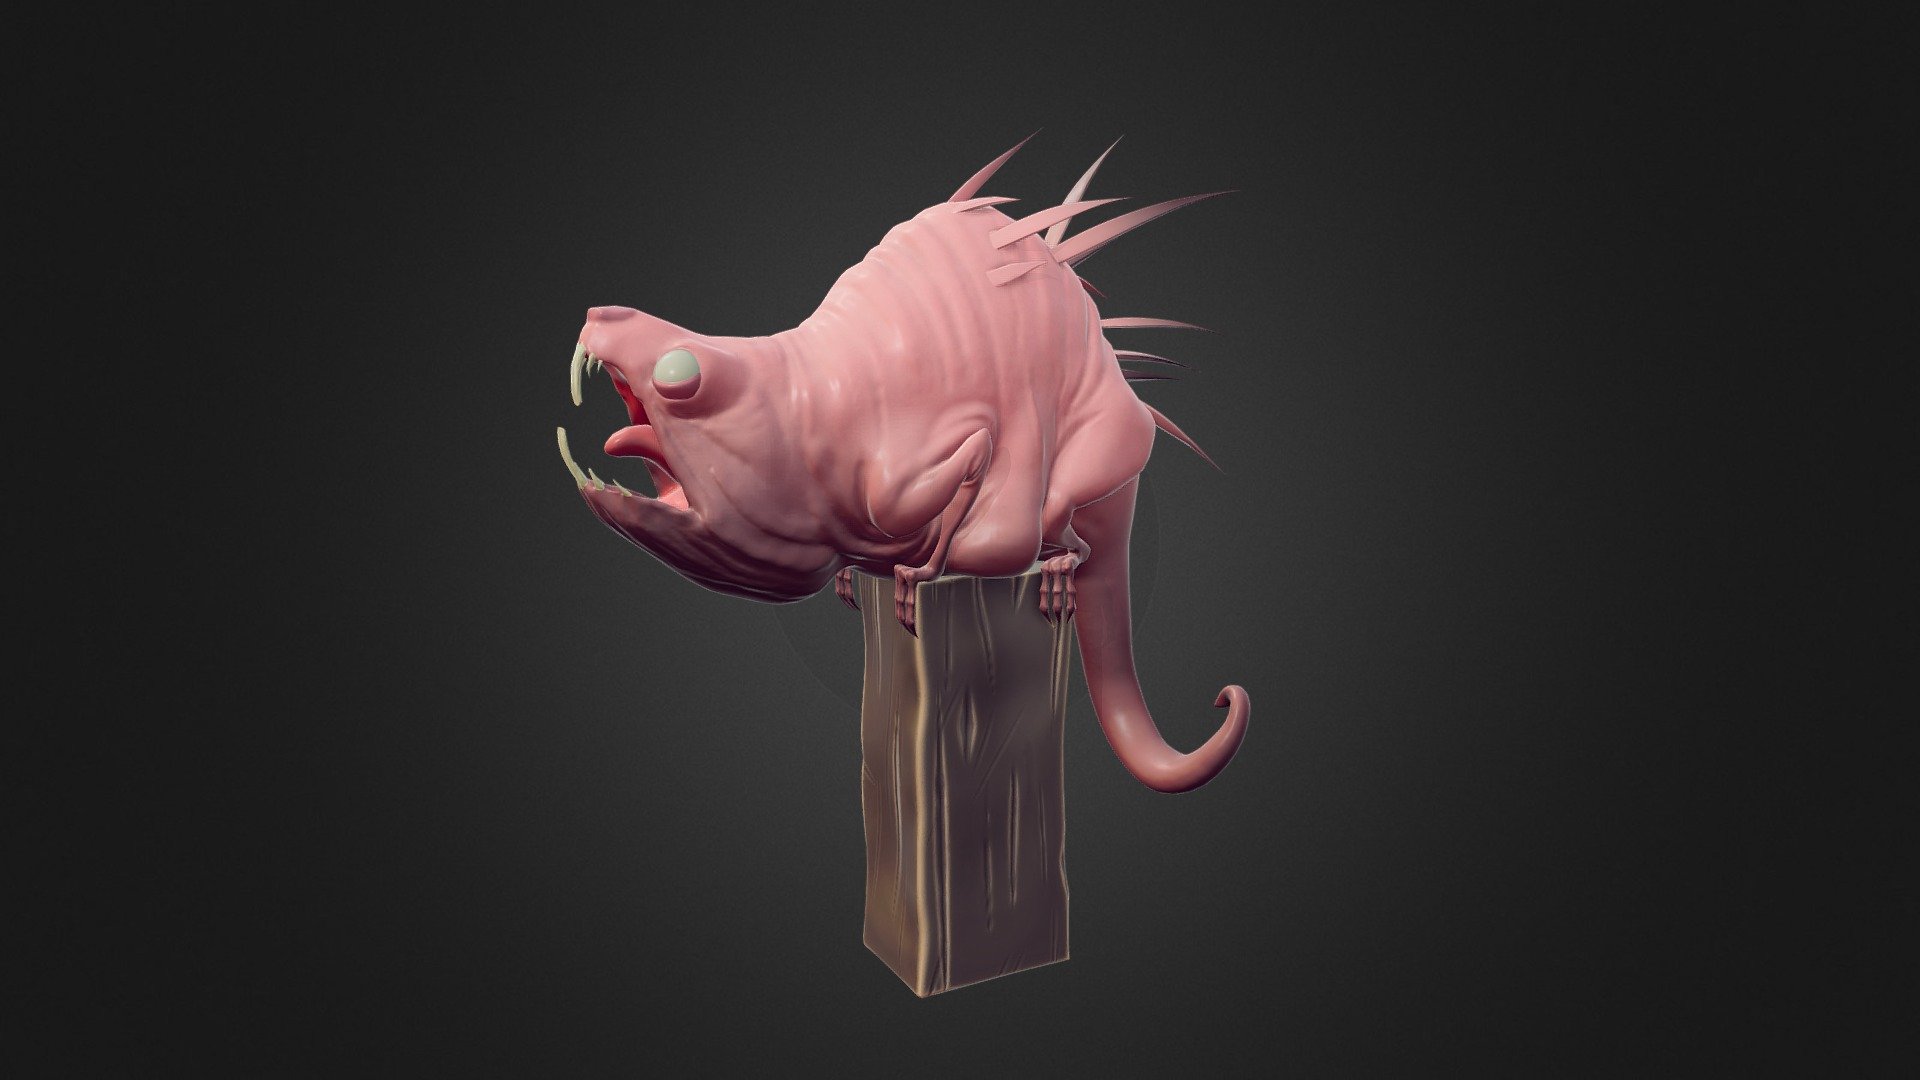 3d model based on concept from Tooth Wu
https://www.artstation.com/artwork/aRLgA2 - Mole-rat - 3D model by Nicolas Neve (@NicolasNeve) 3d model